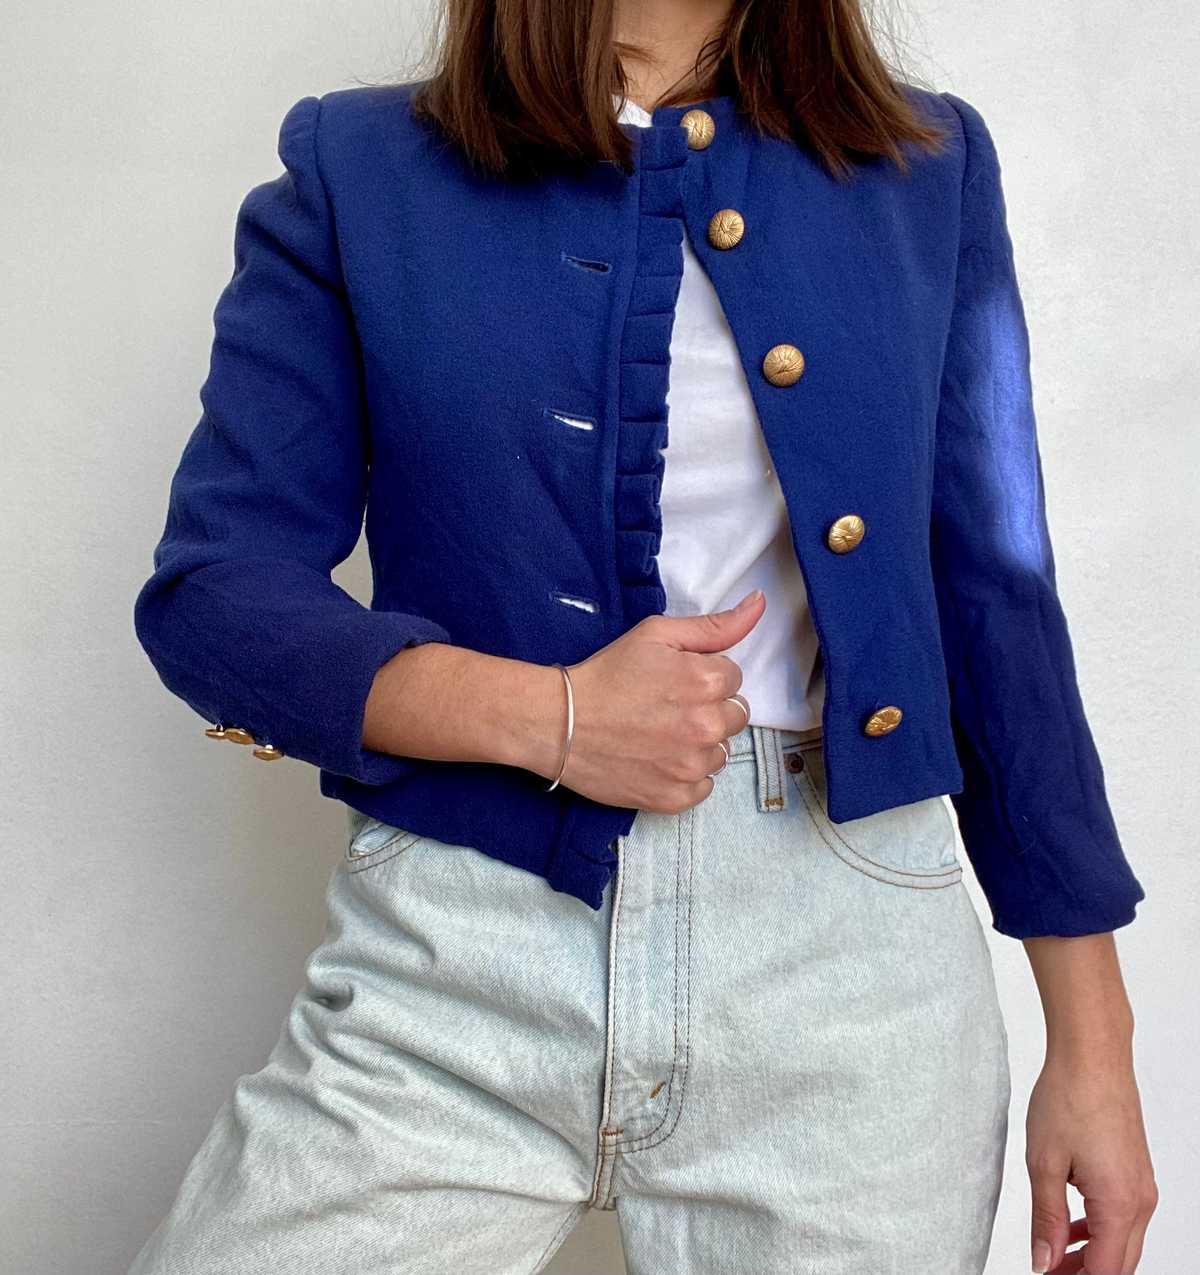 Photo of Belle veste uniforme bleue Saks of fifth avenue